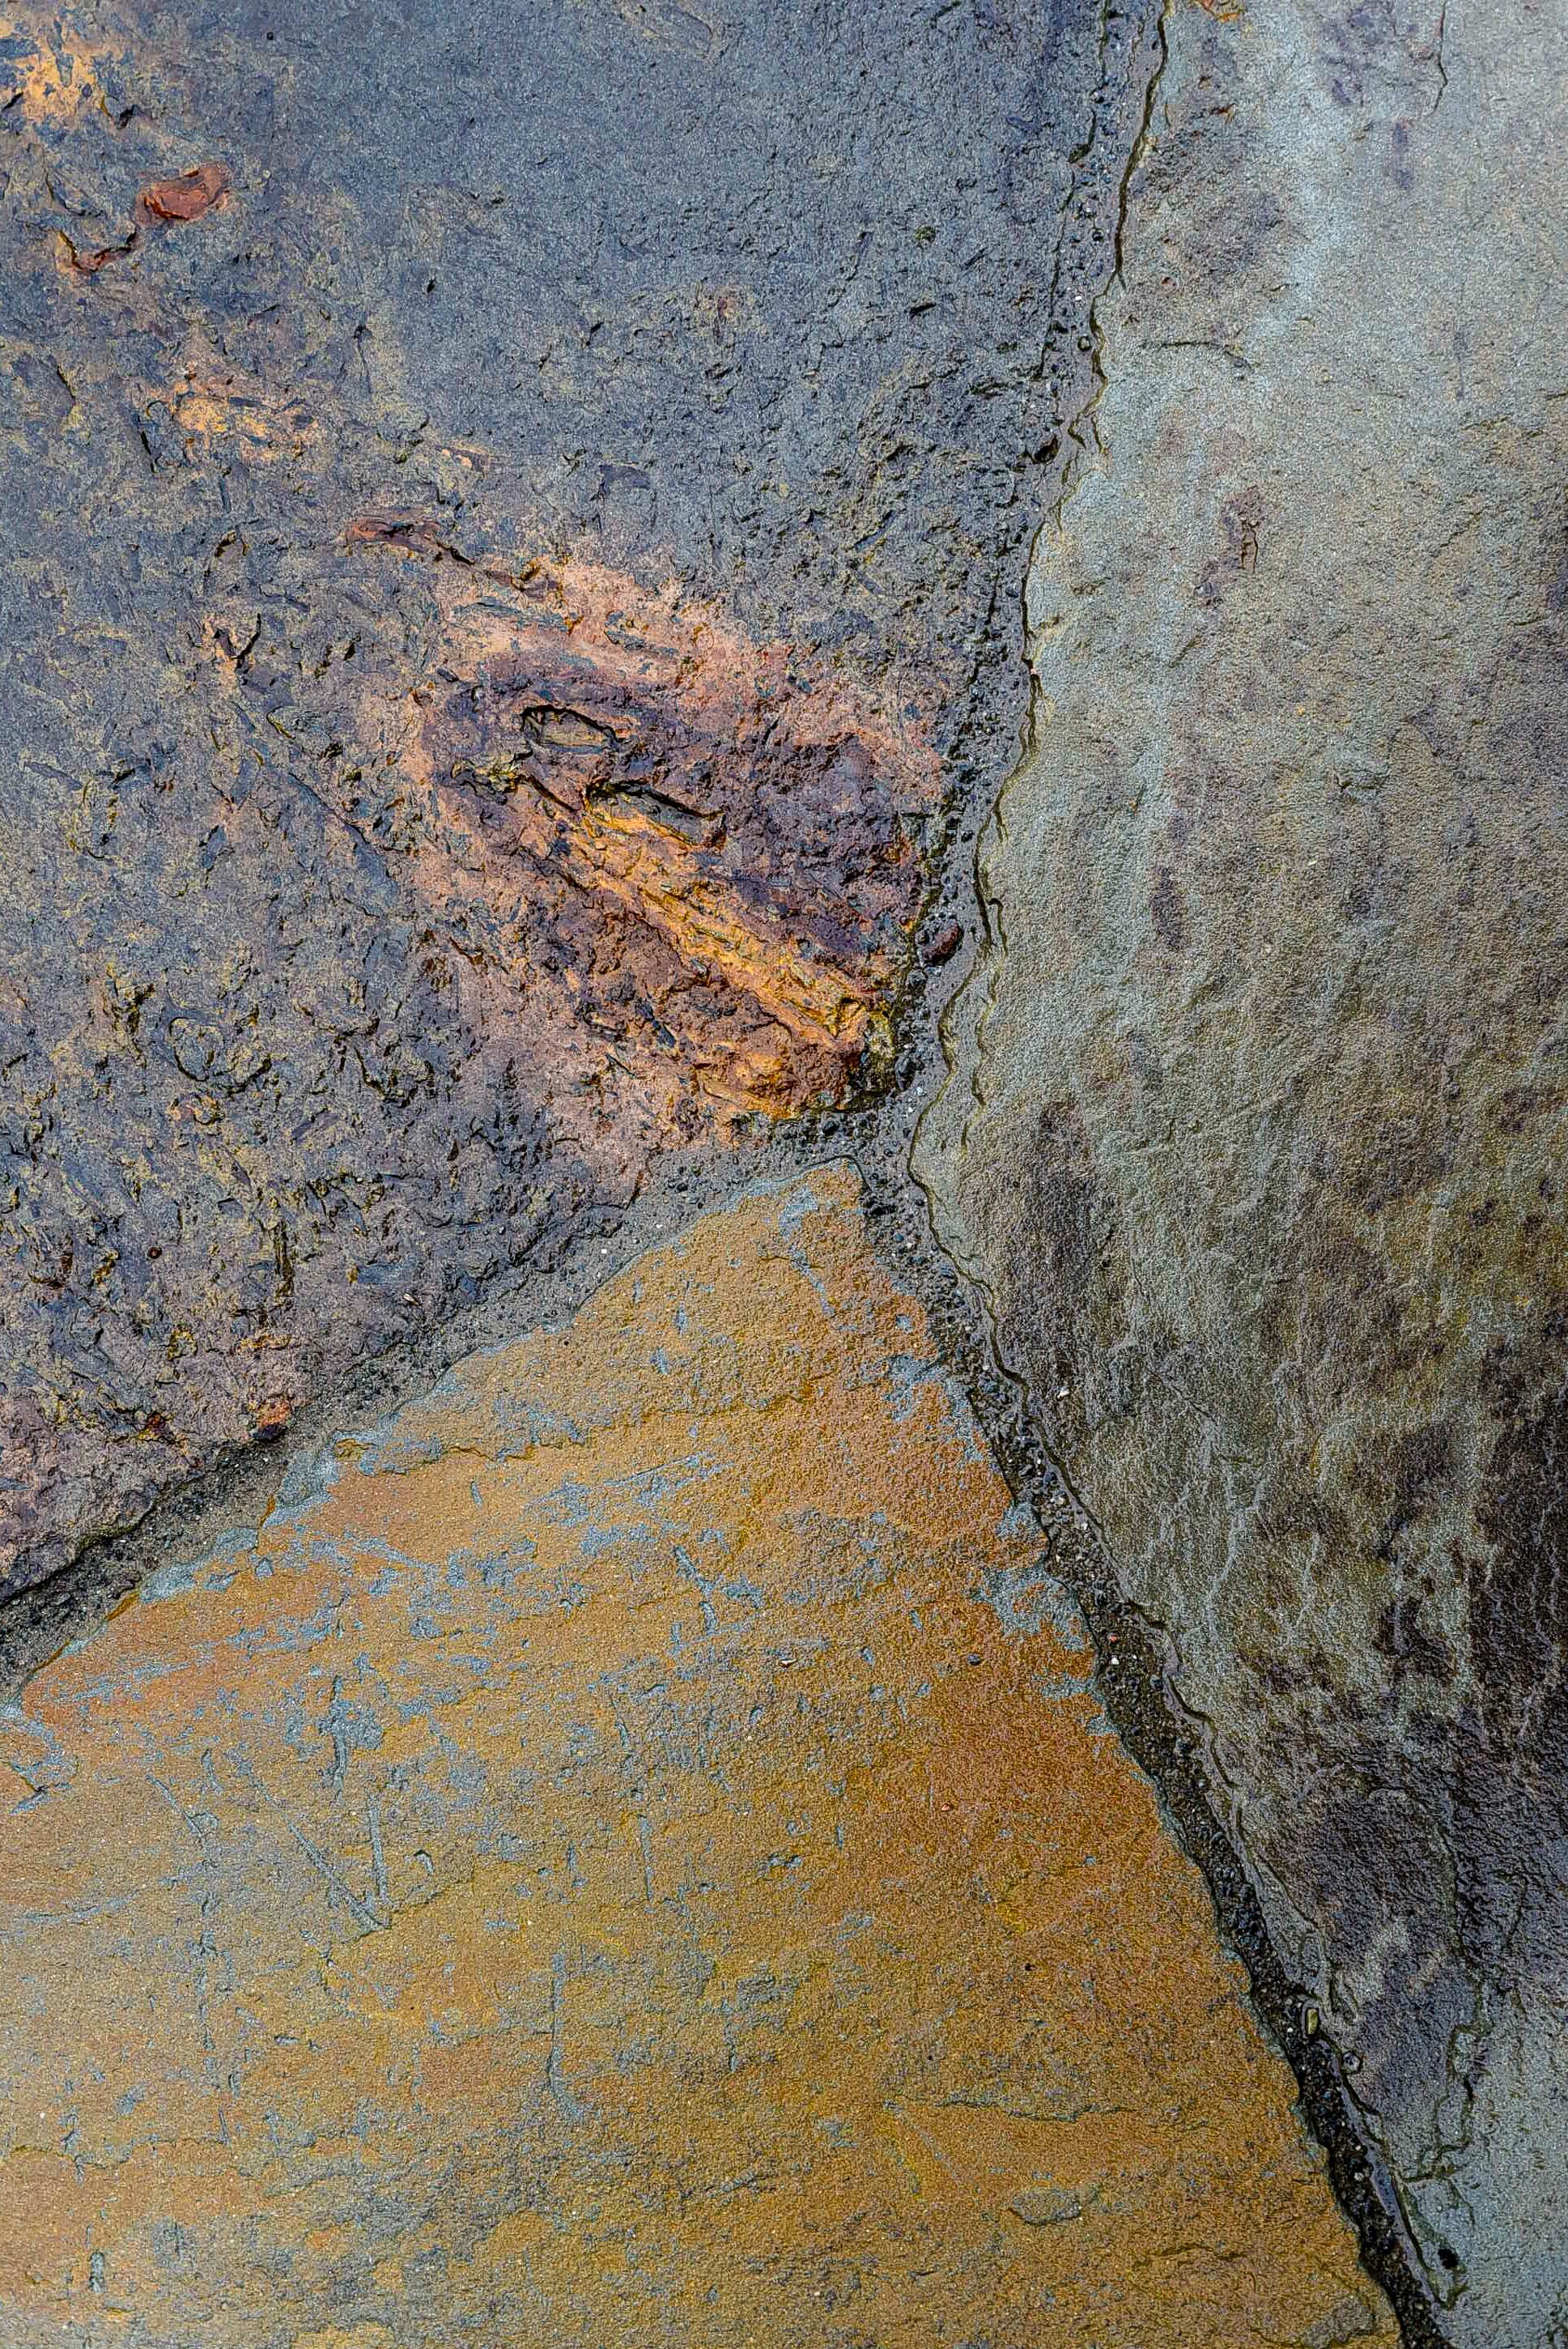 Front walk stone work detail shot